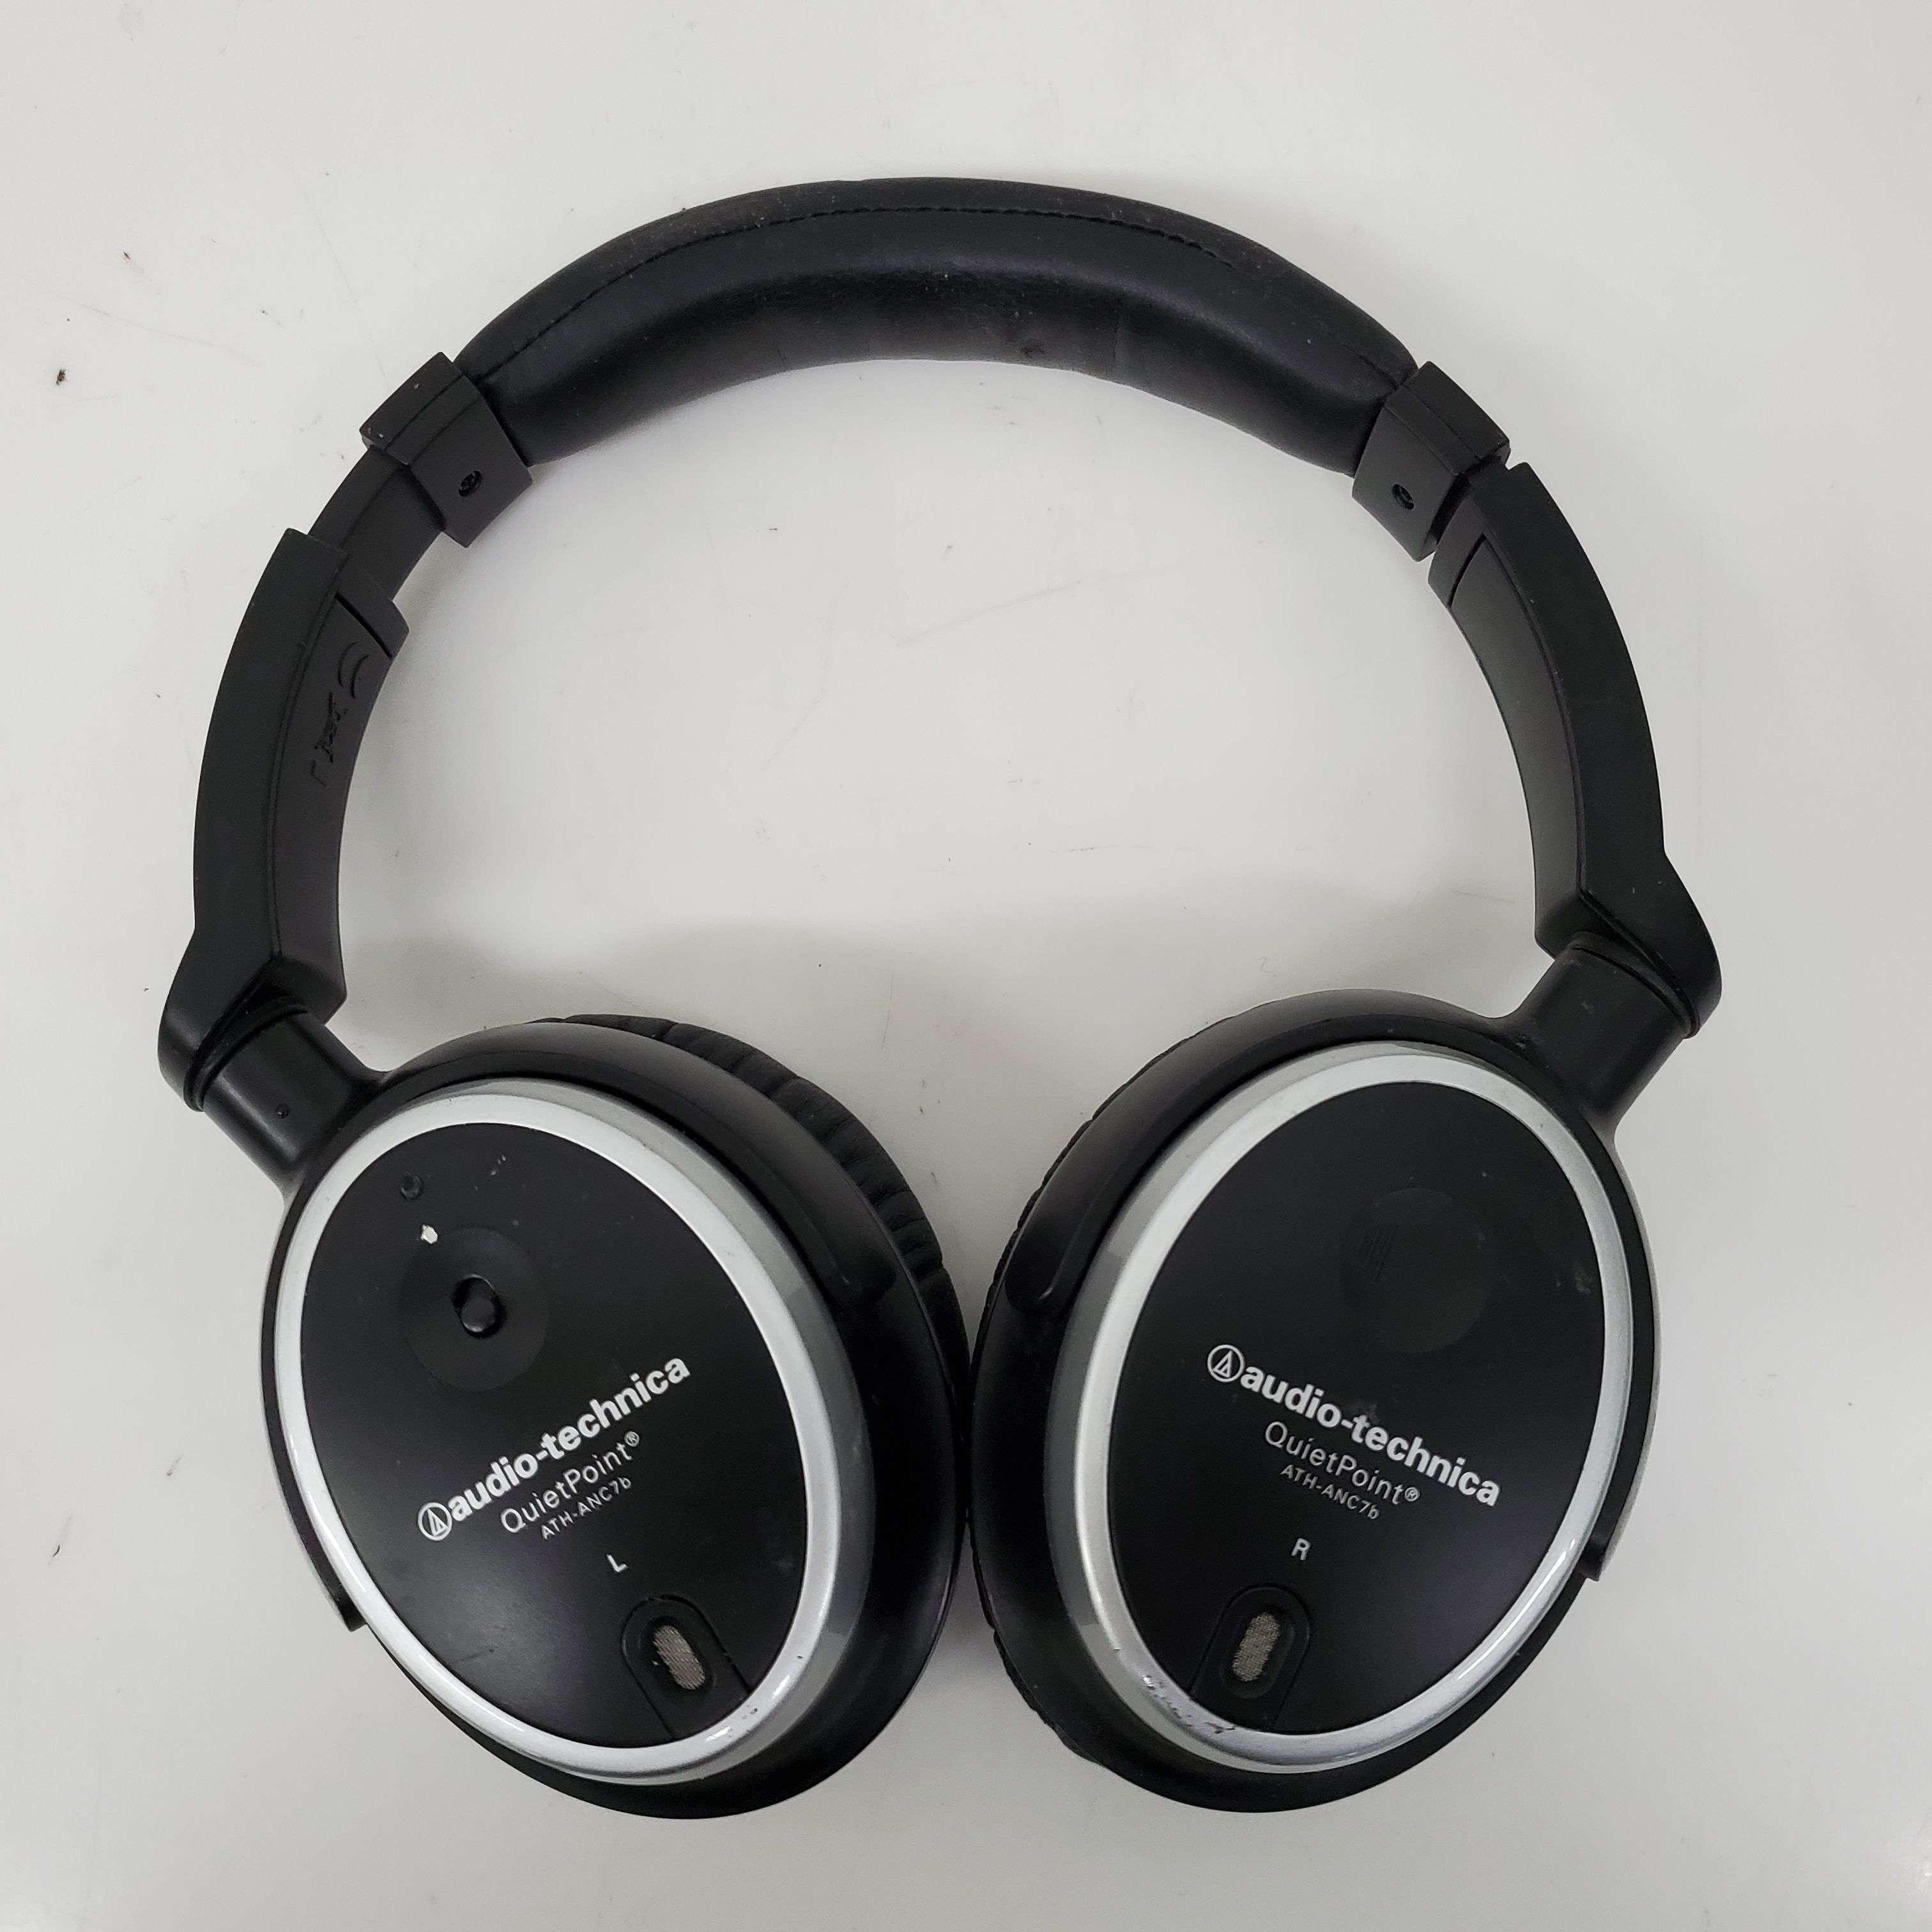 Buy the Audio Technica ATH ANC 7B Quiet Point Headphones